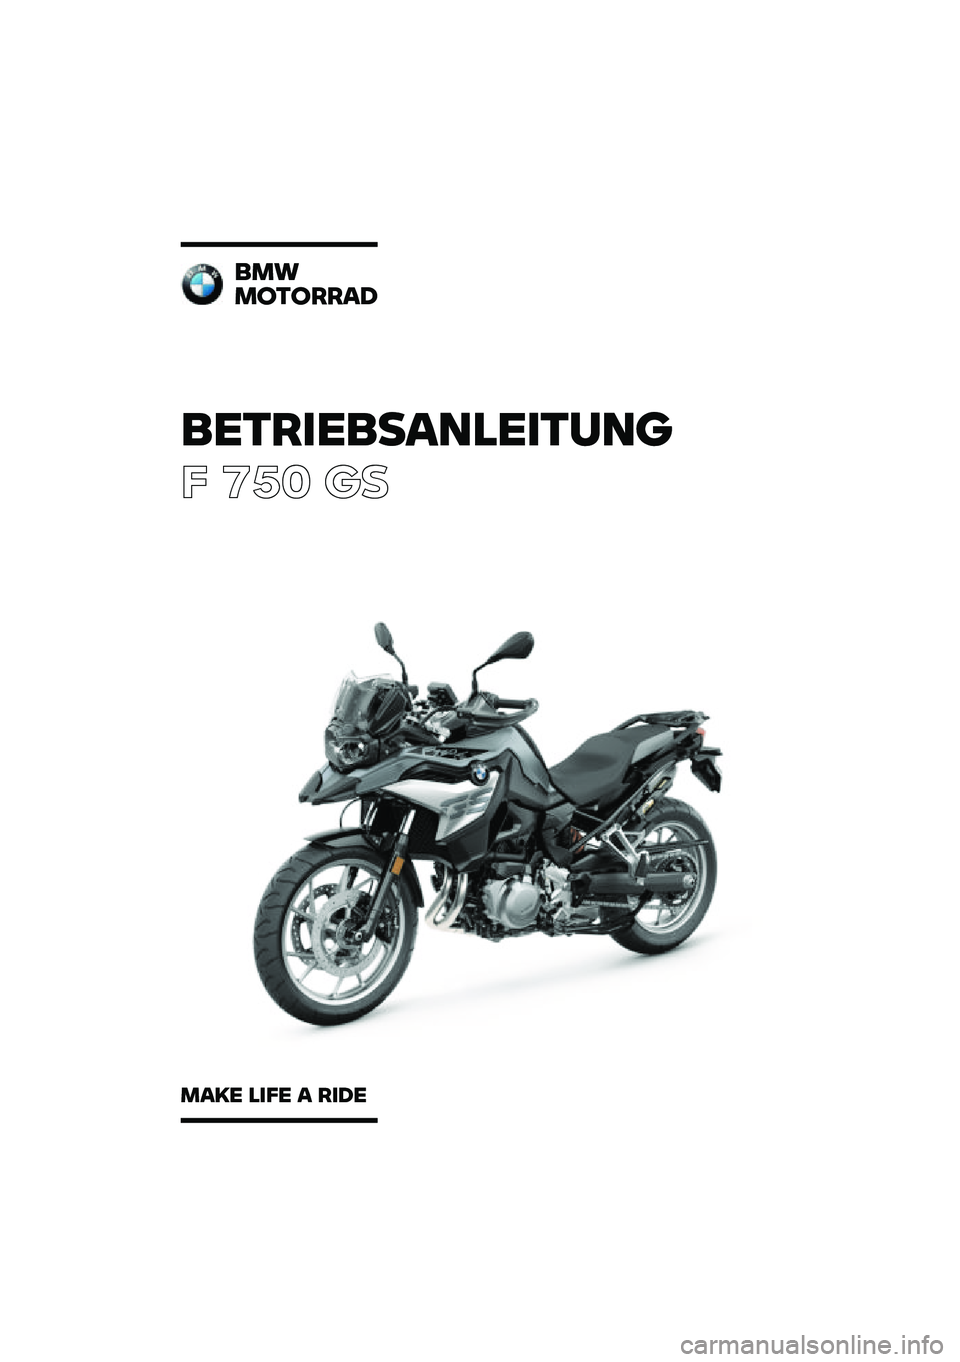 BMW MOTORRAD F 750 GS 2020  Betriebsanleitung (in German) 